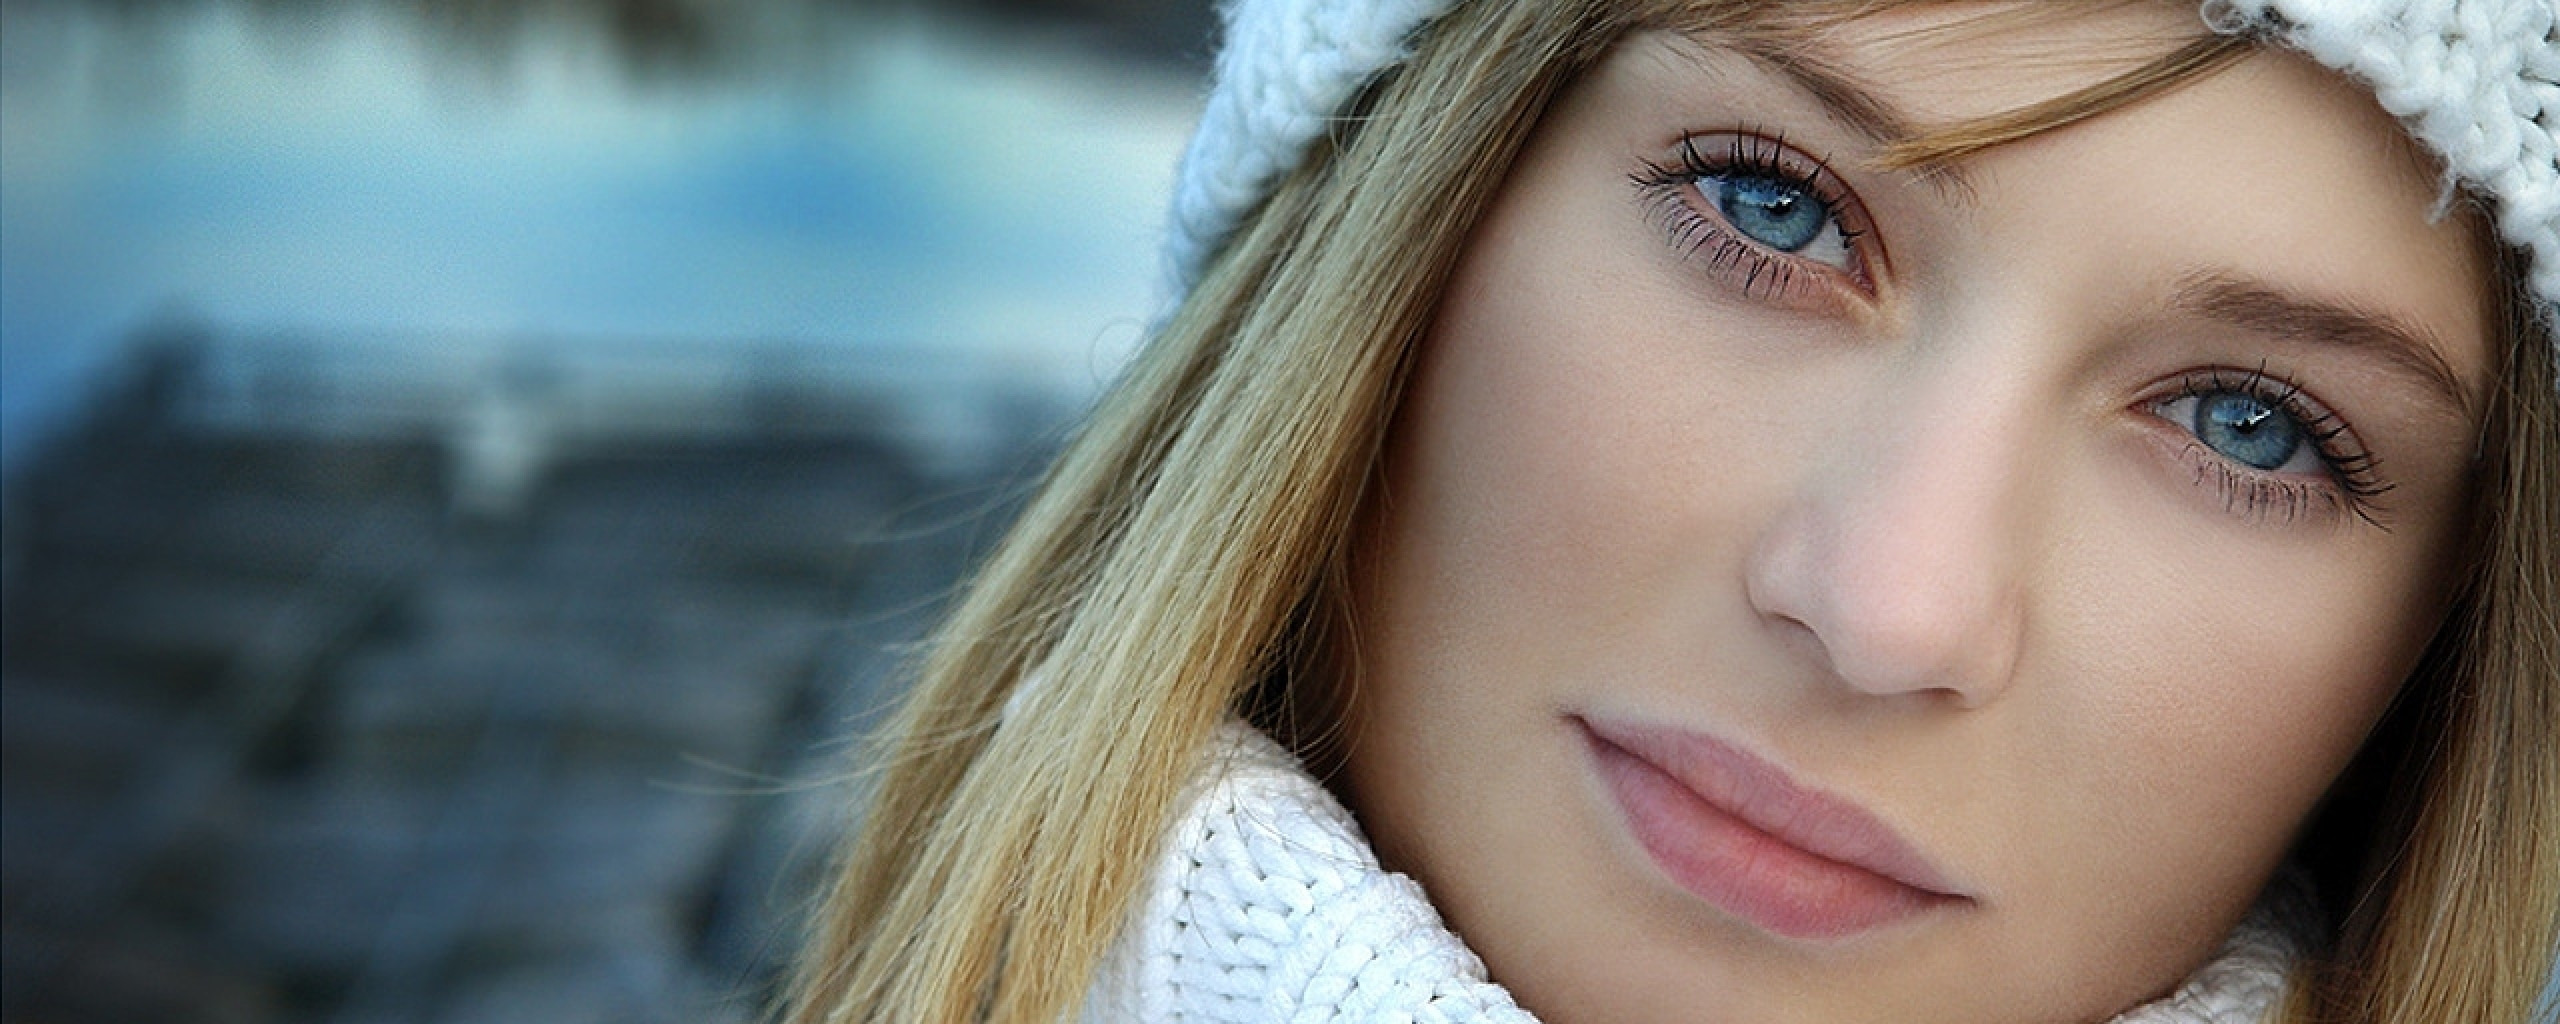 Жена голубоглазая. Алена Арбузова Blue eyed blonde. Портрет девушки. Девушка с голубыми глазами. Голубоглазая женщина.